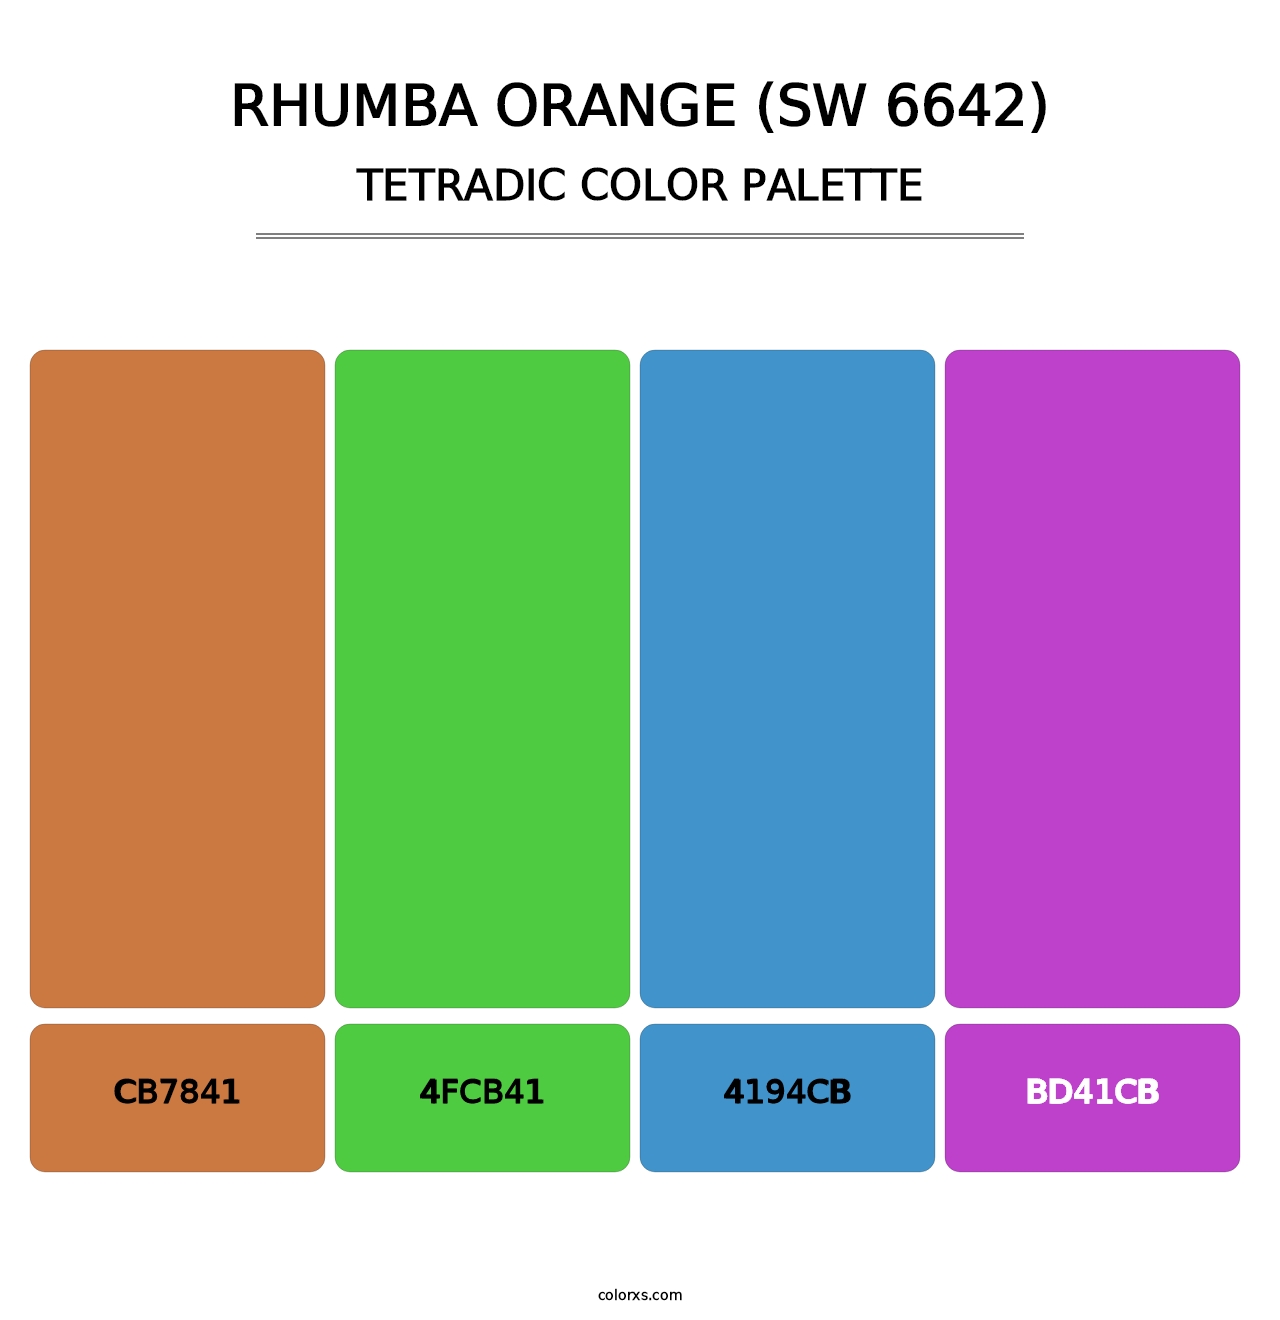 Rhumba Orange (SW 6642) - Tetradic Color Palette